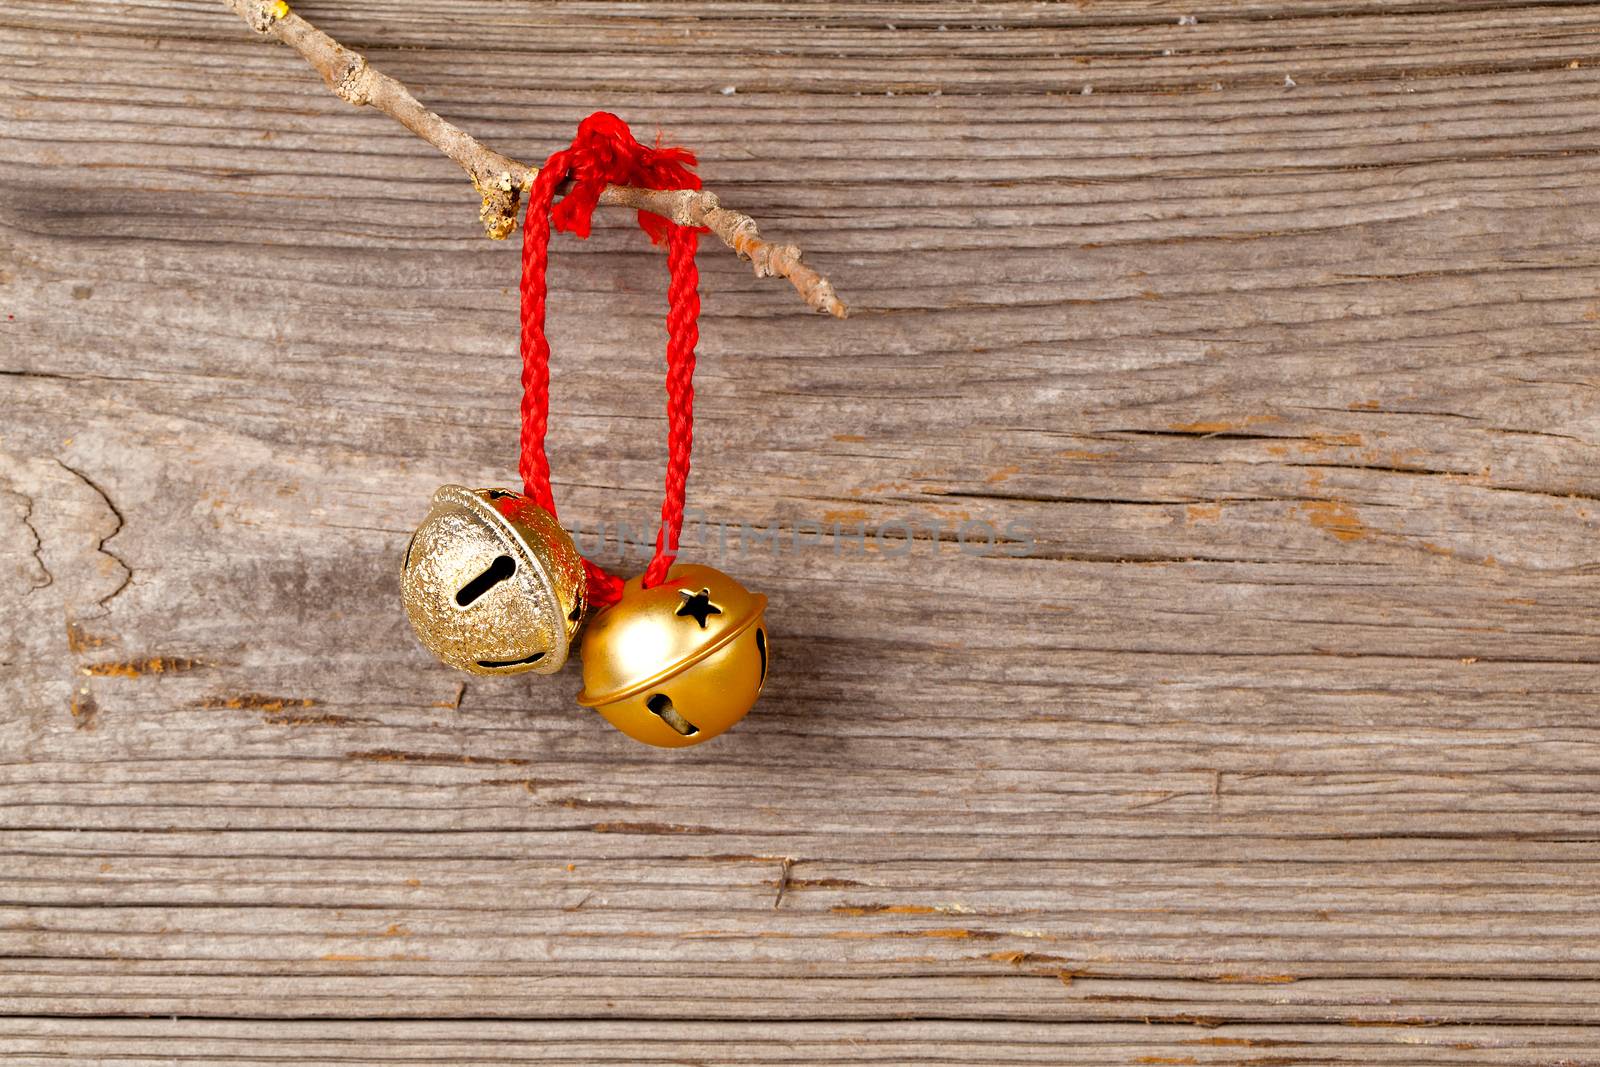 Christmas bells on wooden background by motorolka